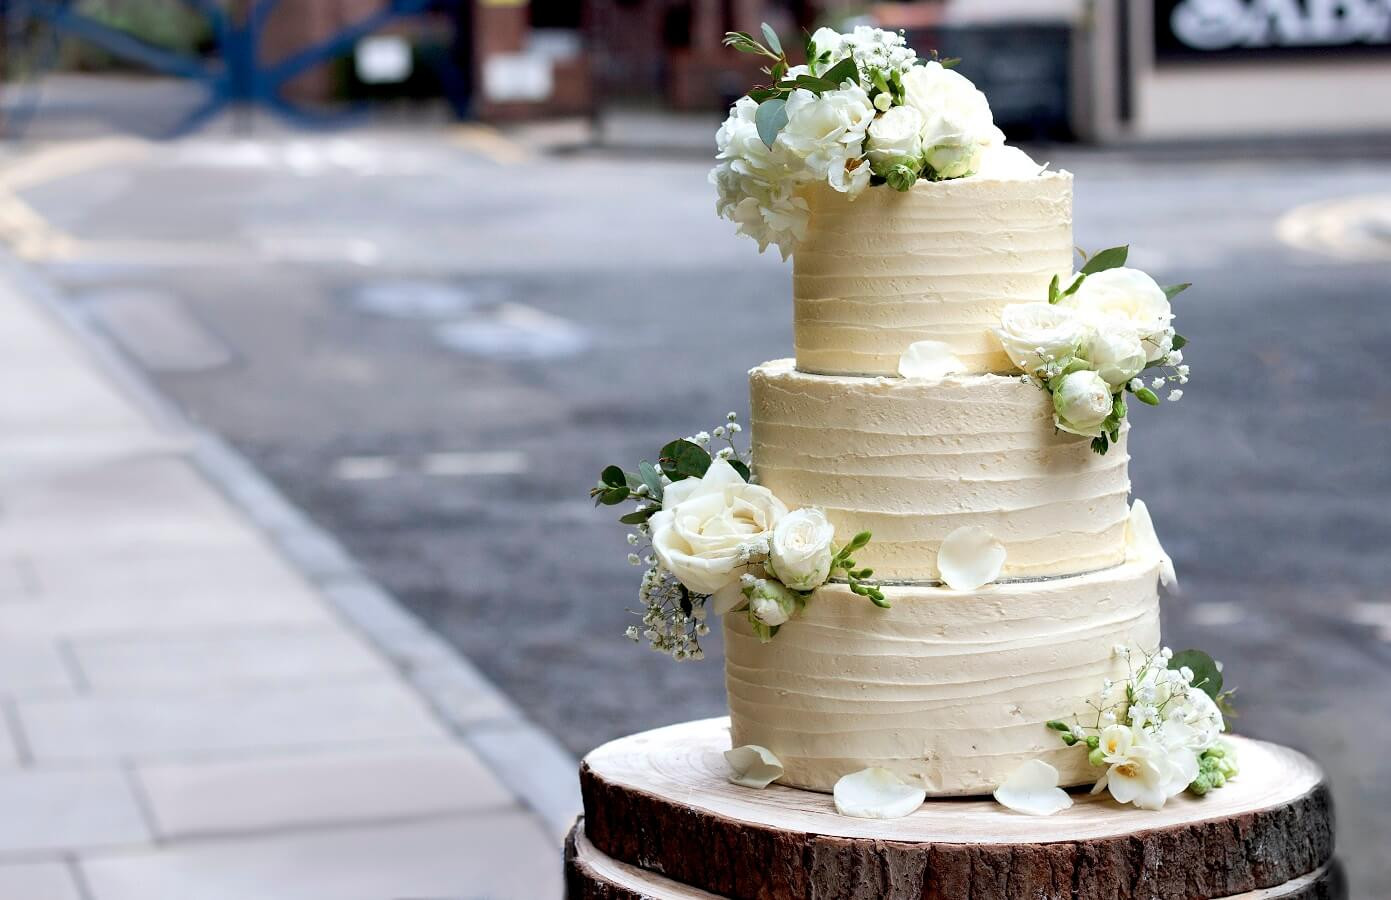 Food City Wedding Cakes
 Three tiered vegan wedding cake